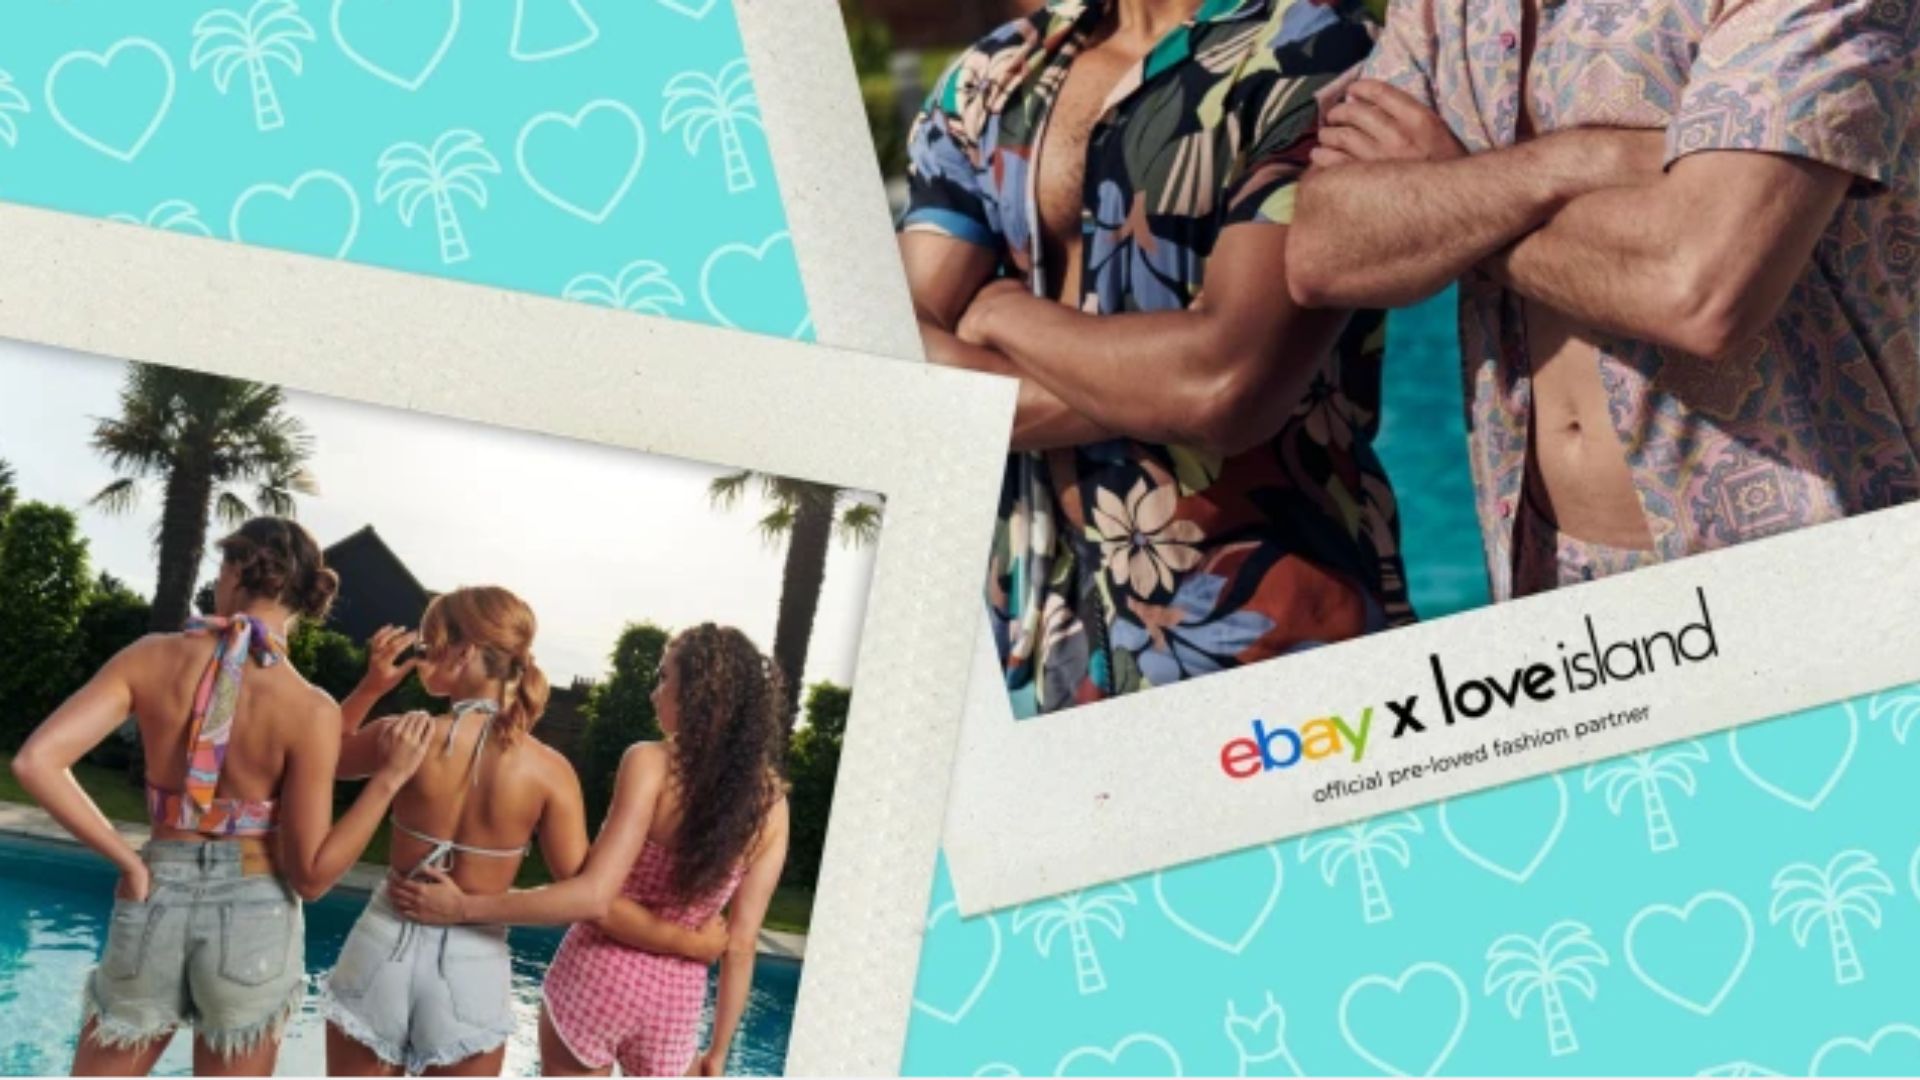 Love Island's organization with eBay is evidence we ve gone gaga